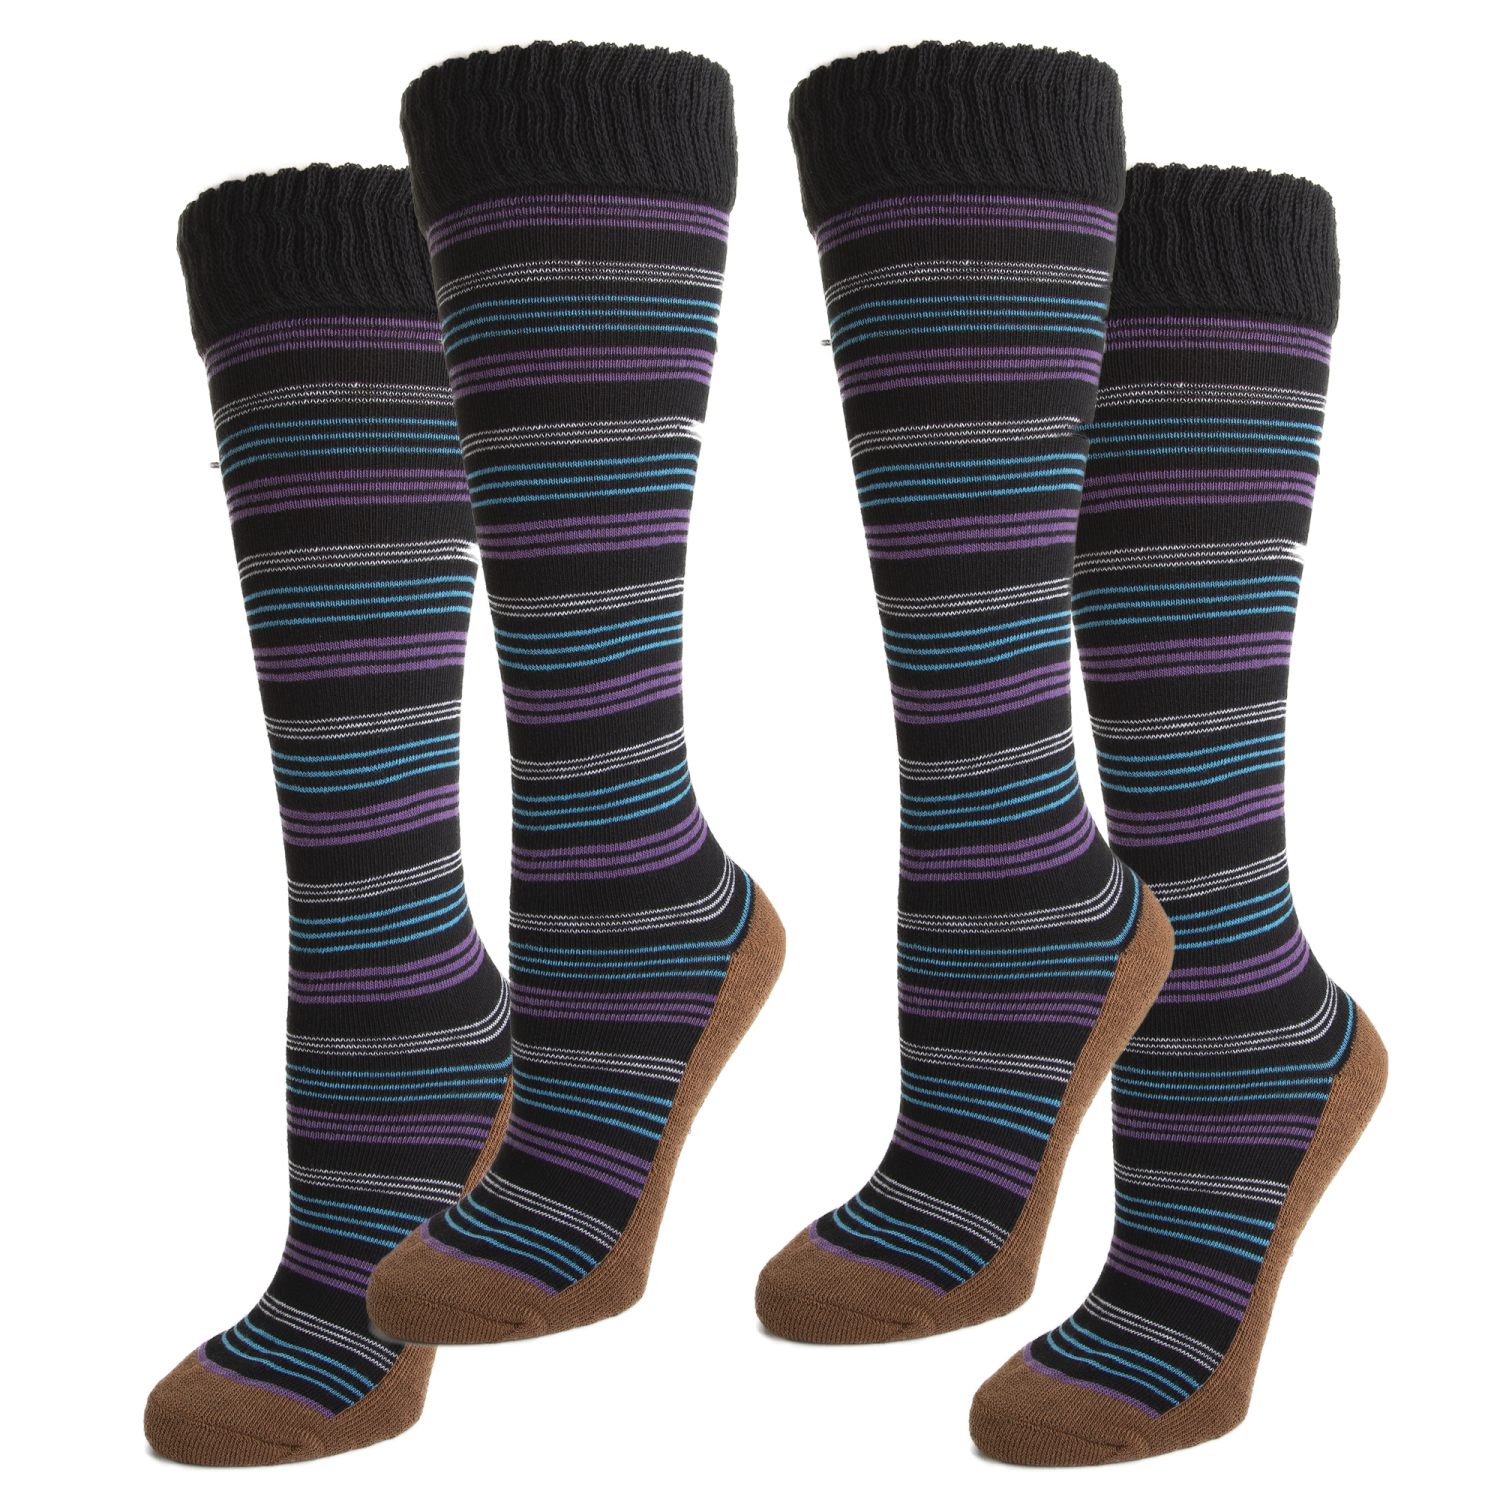 Copper Sole Women's 2 Pack Work Fashion Stripe Knee High Socks Apparel ...